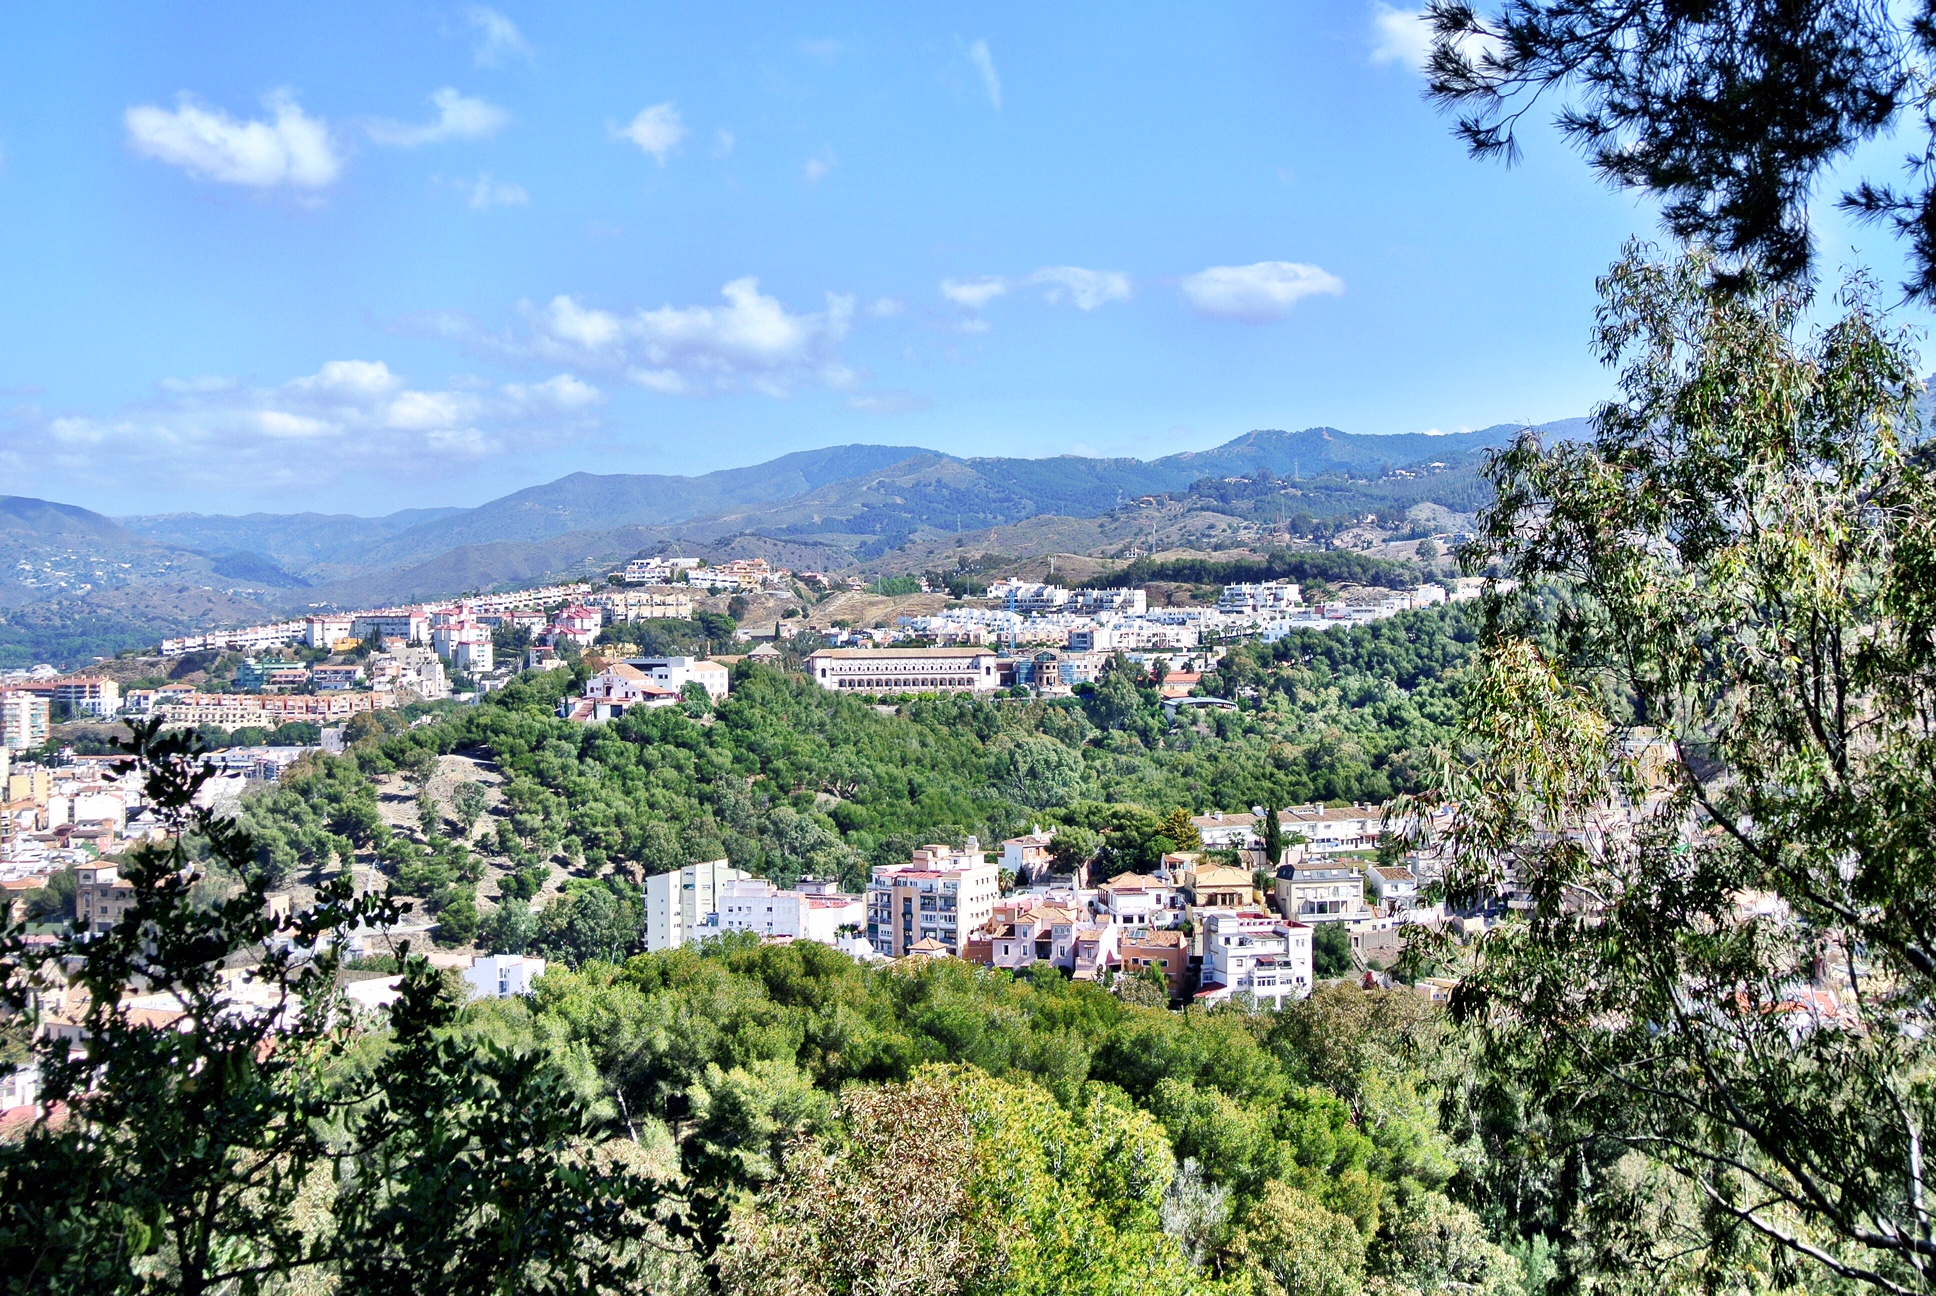 The Gibralfaro: The Most Spectacular Views in Malaga